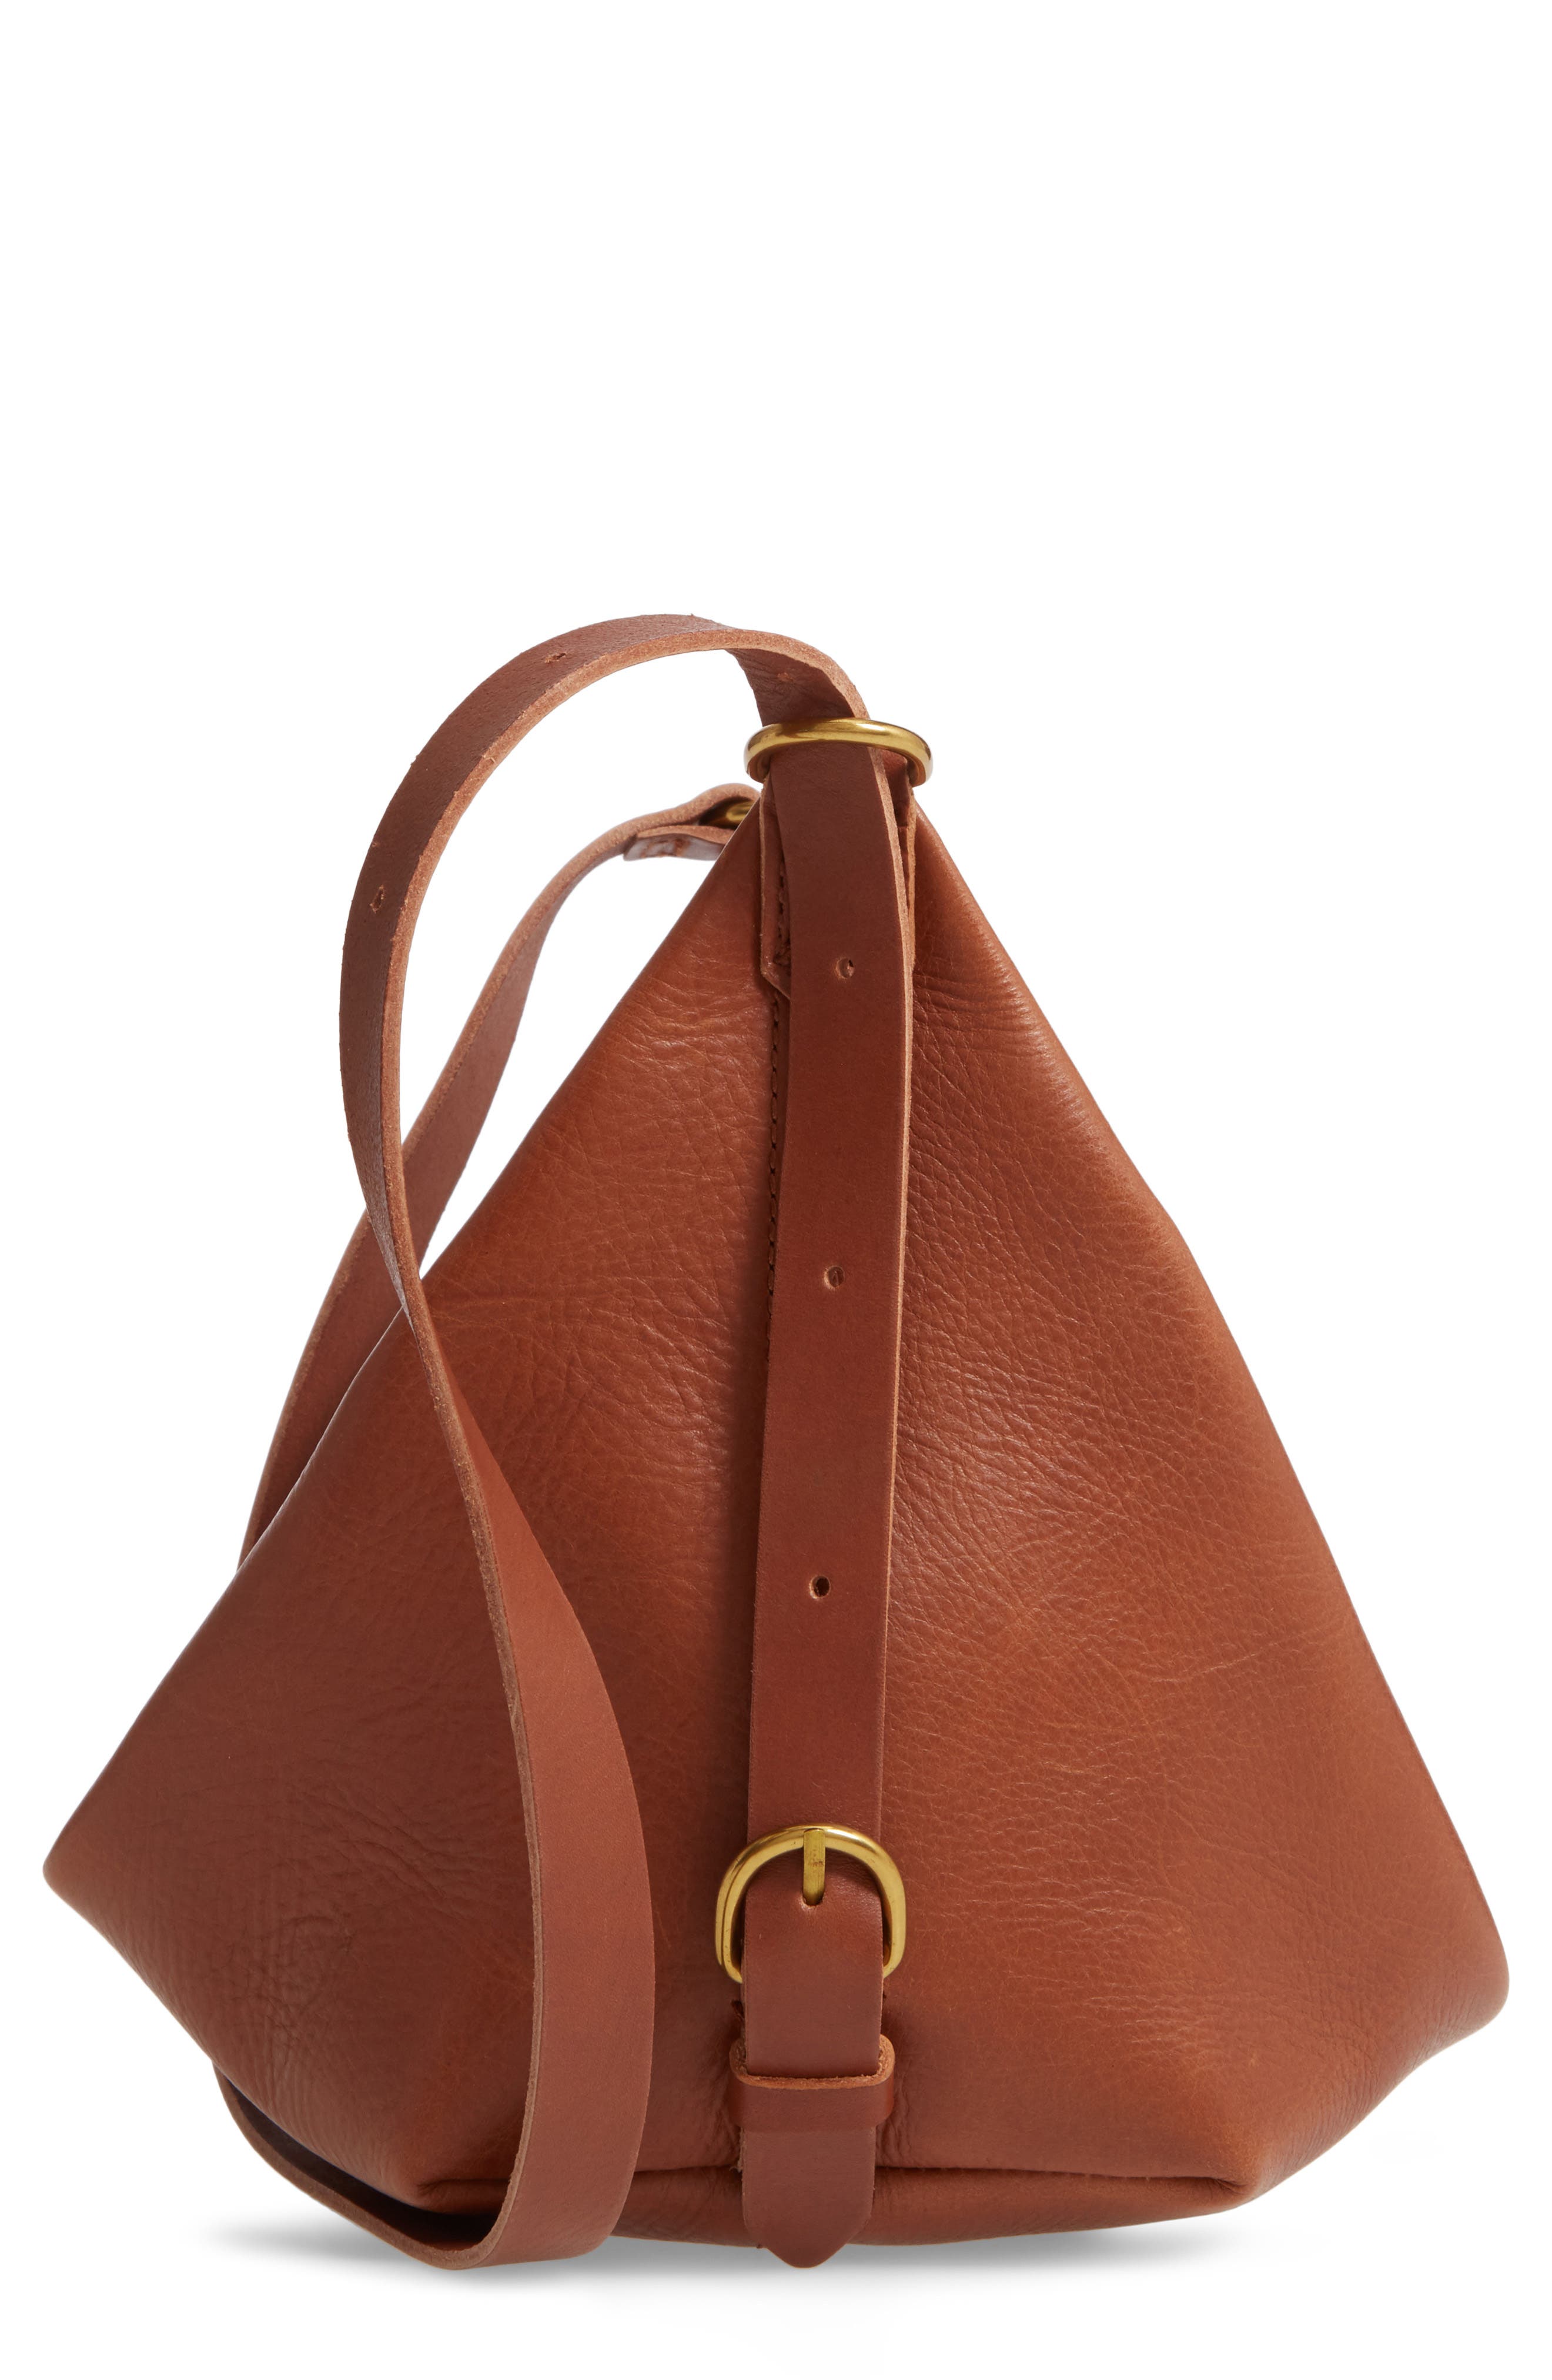 New Stylish Handbags for Girls trending in Fashion 2020